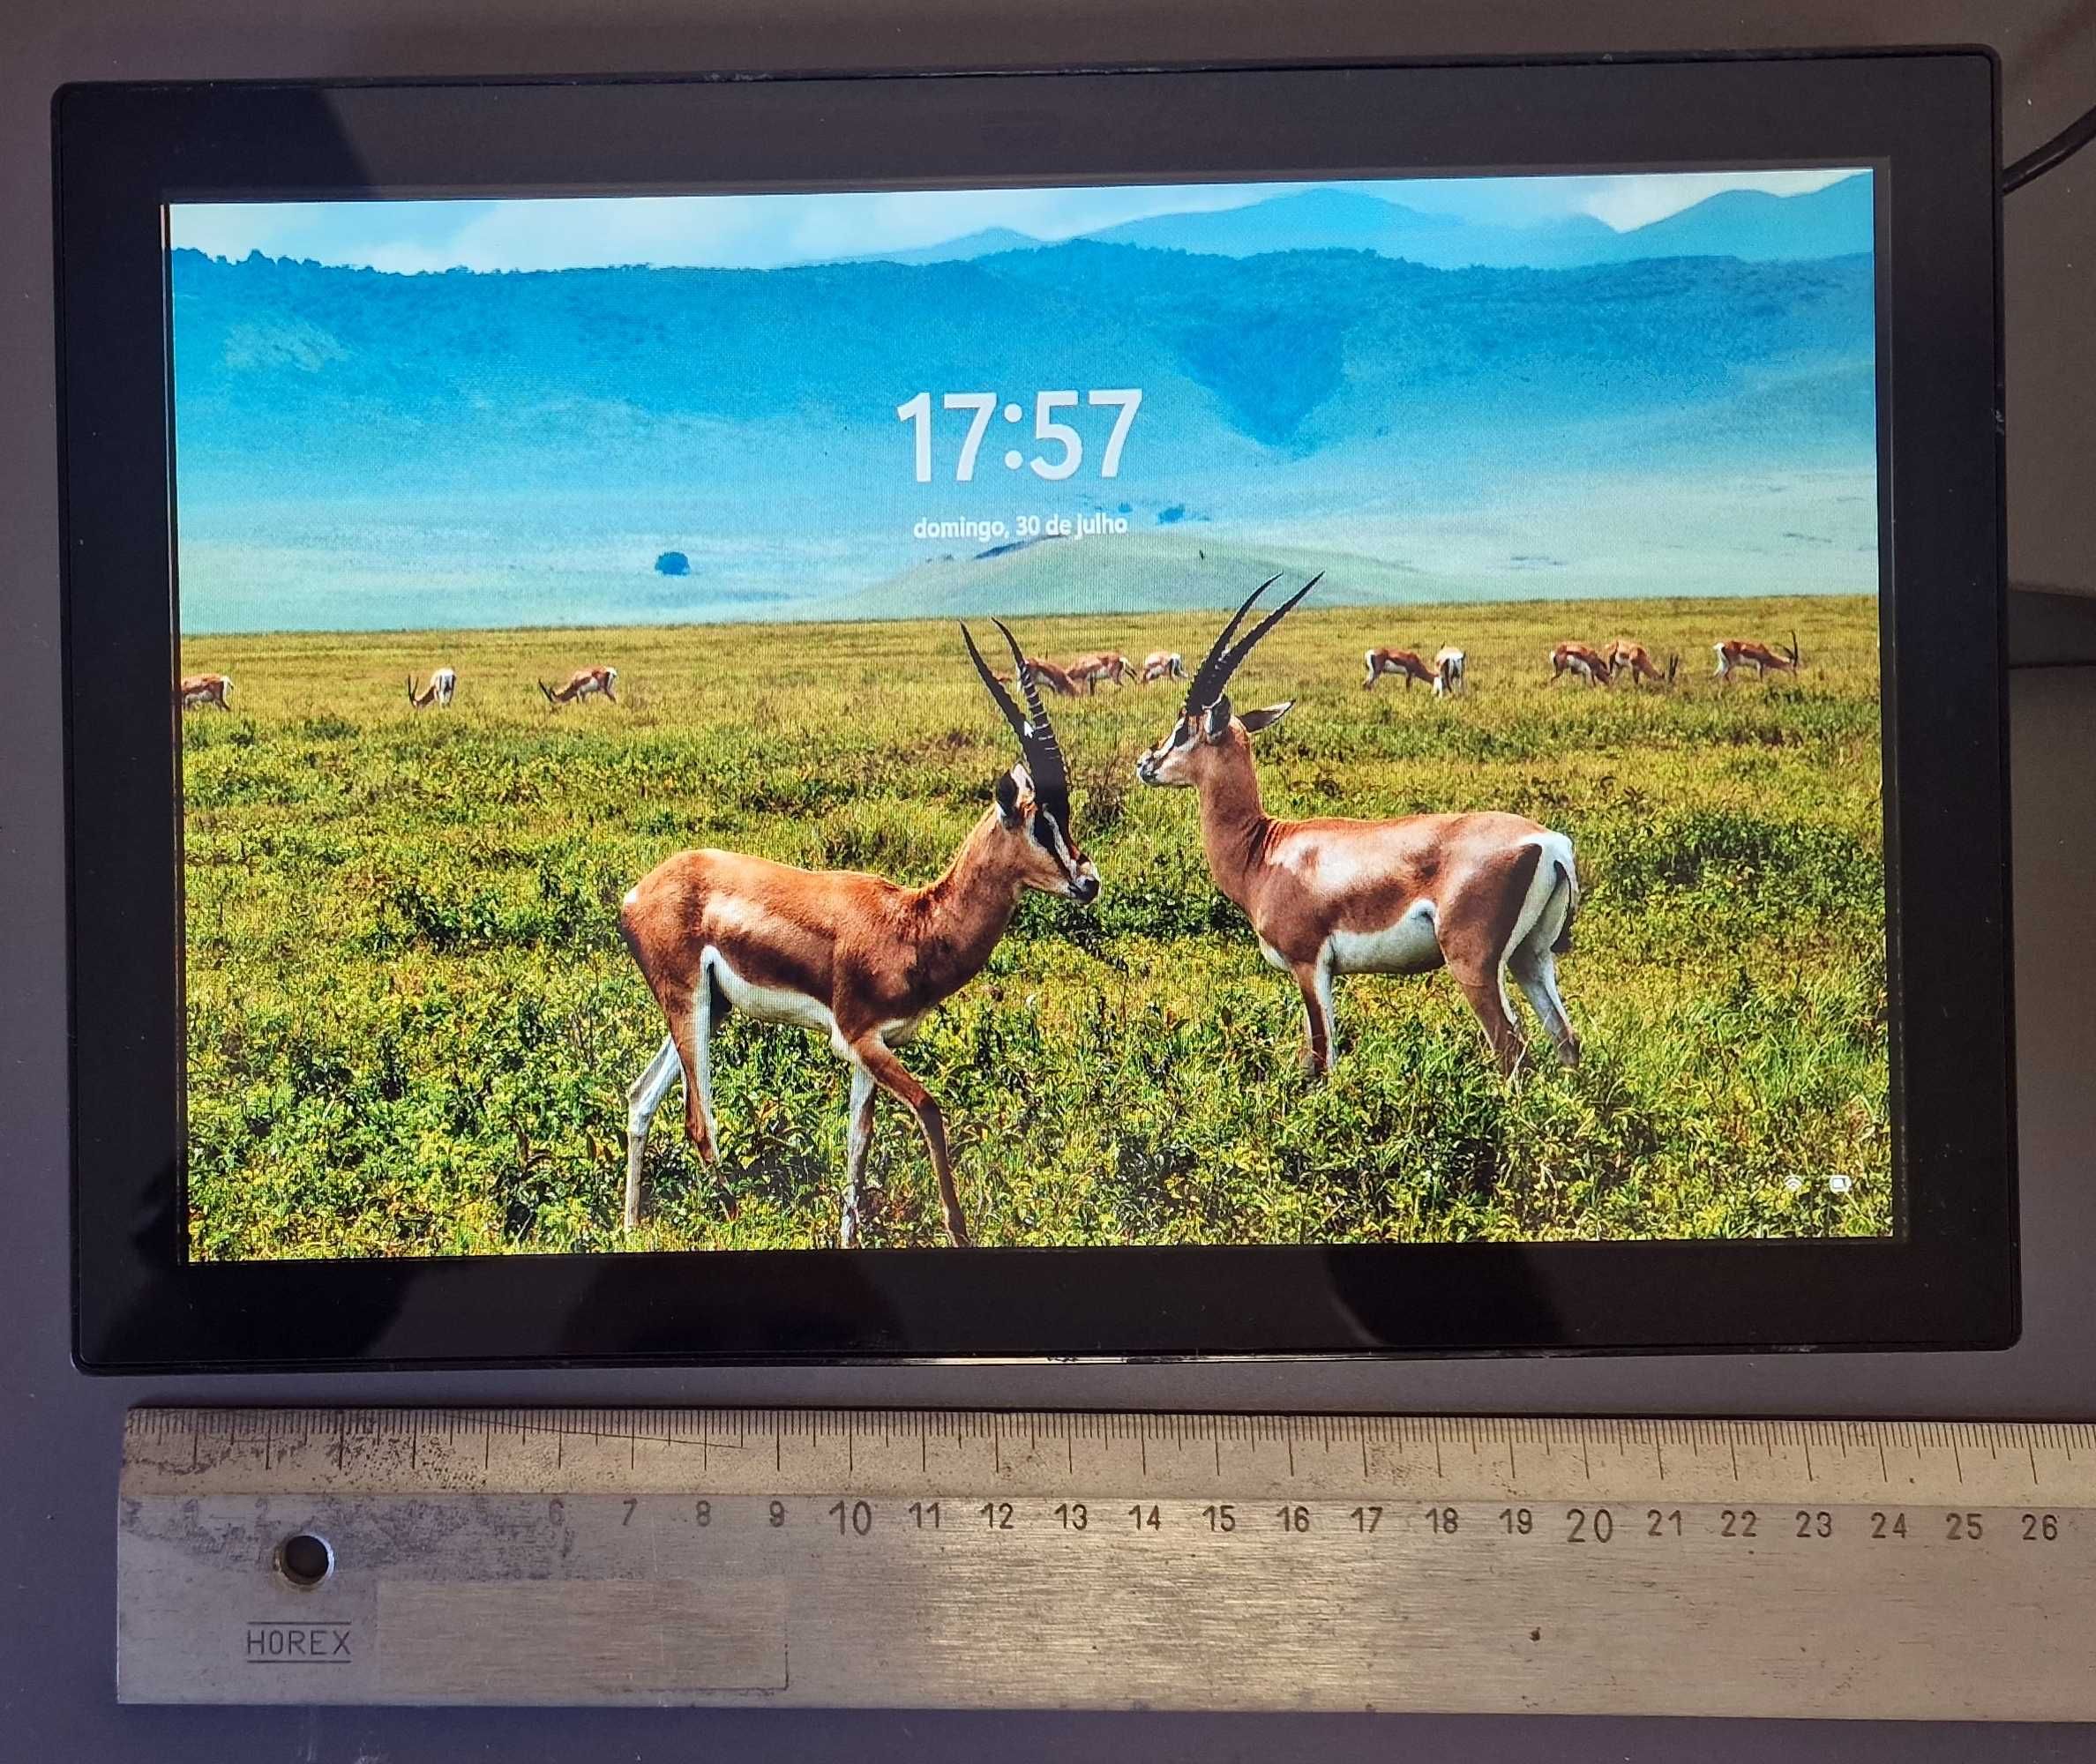 Samsung's DB10E-T 10.1" touchscreen